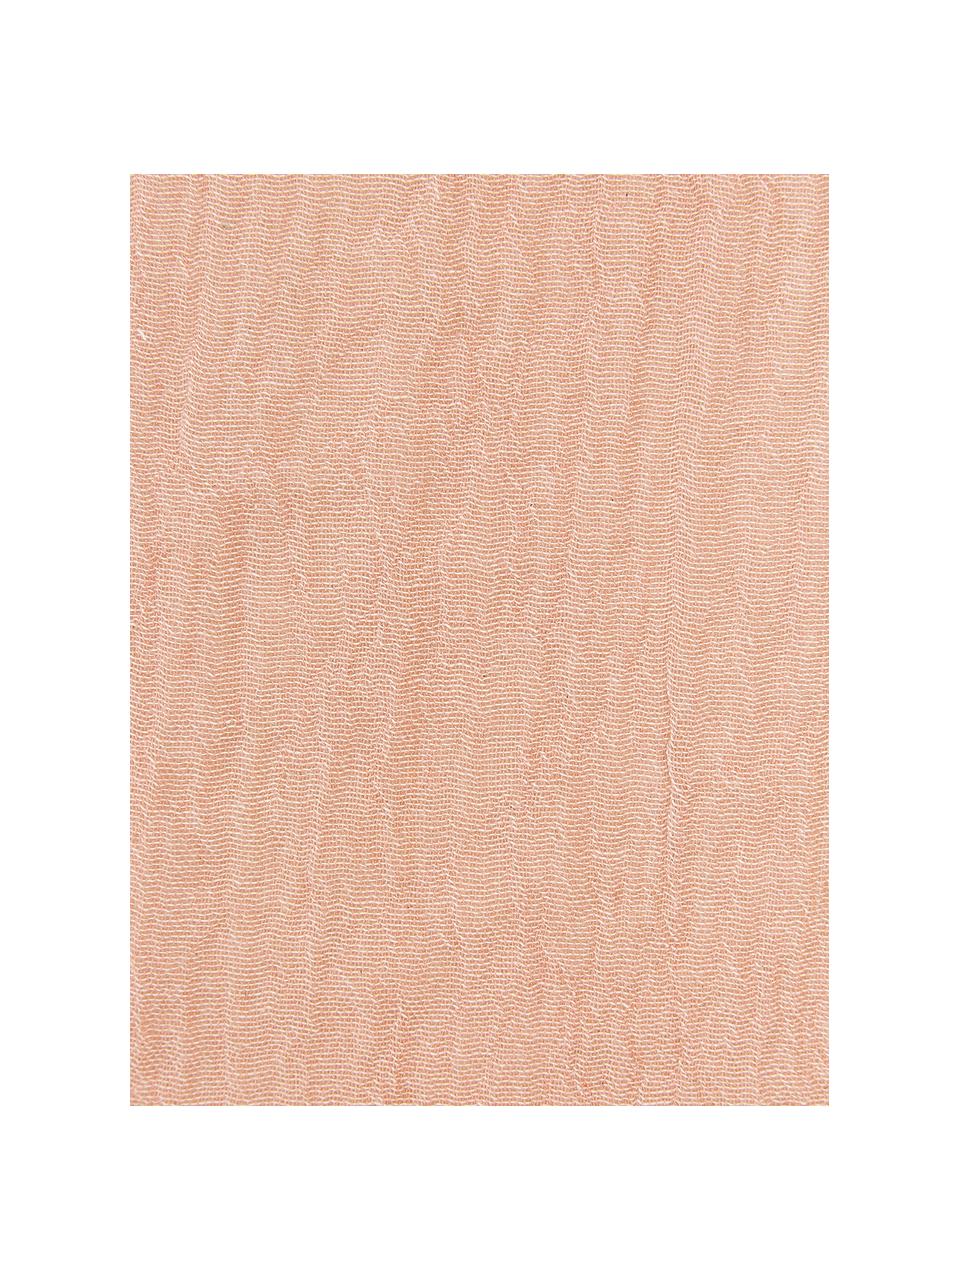 Ubrousek Layer, 4 ks, 100 % bavlna, Růžová, Š 45 cm, D 45 cm